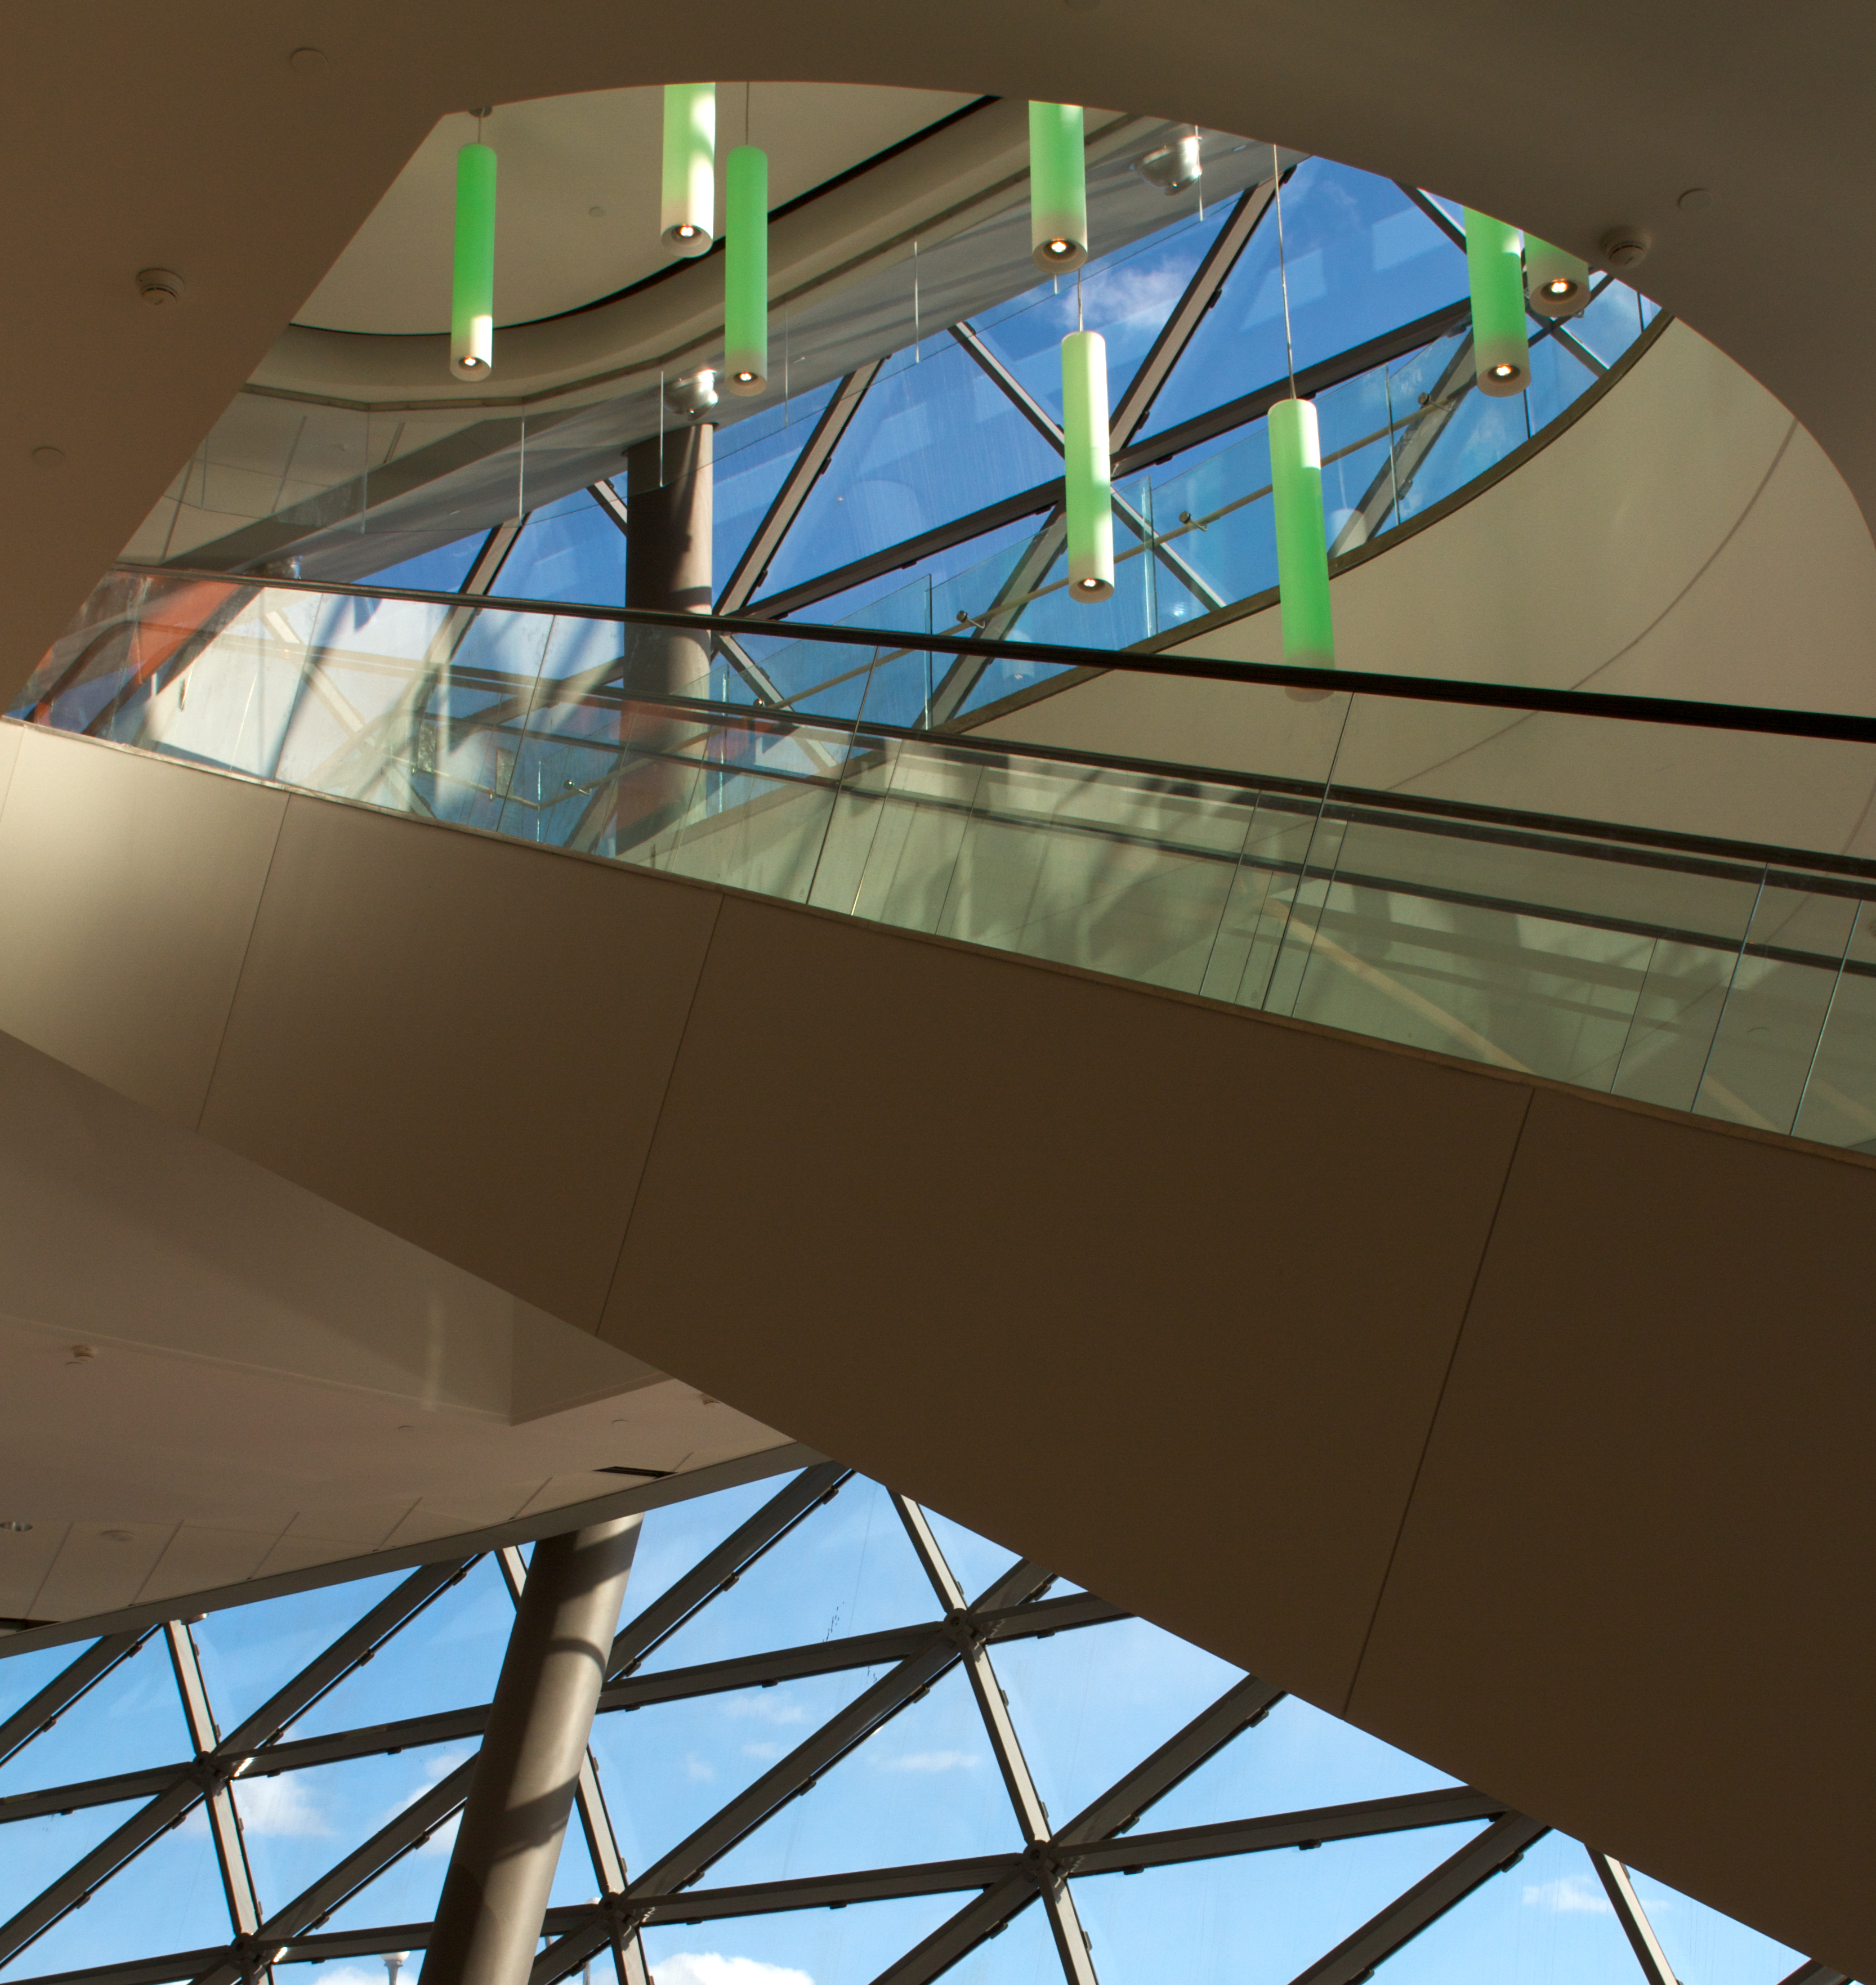 Sequence modern lighting fixtures emit green light over an escalator in a large, well-lit convention center.